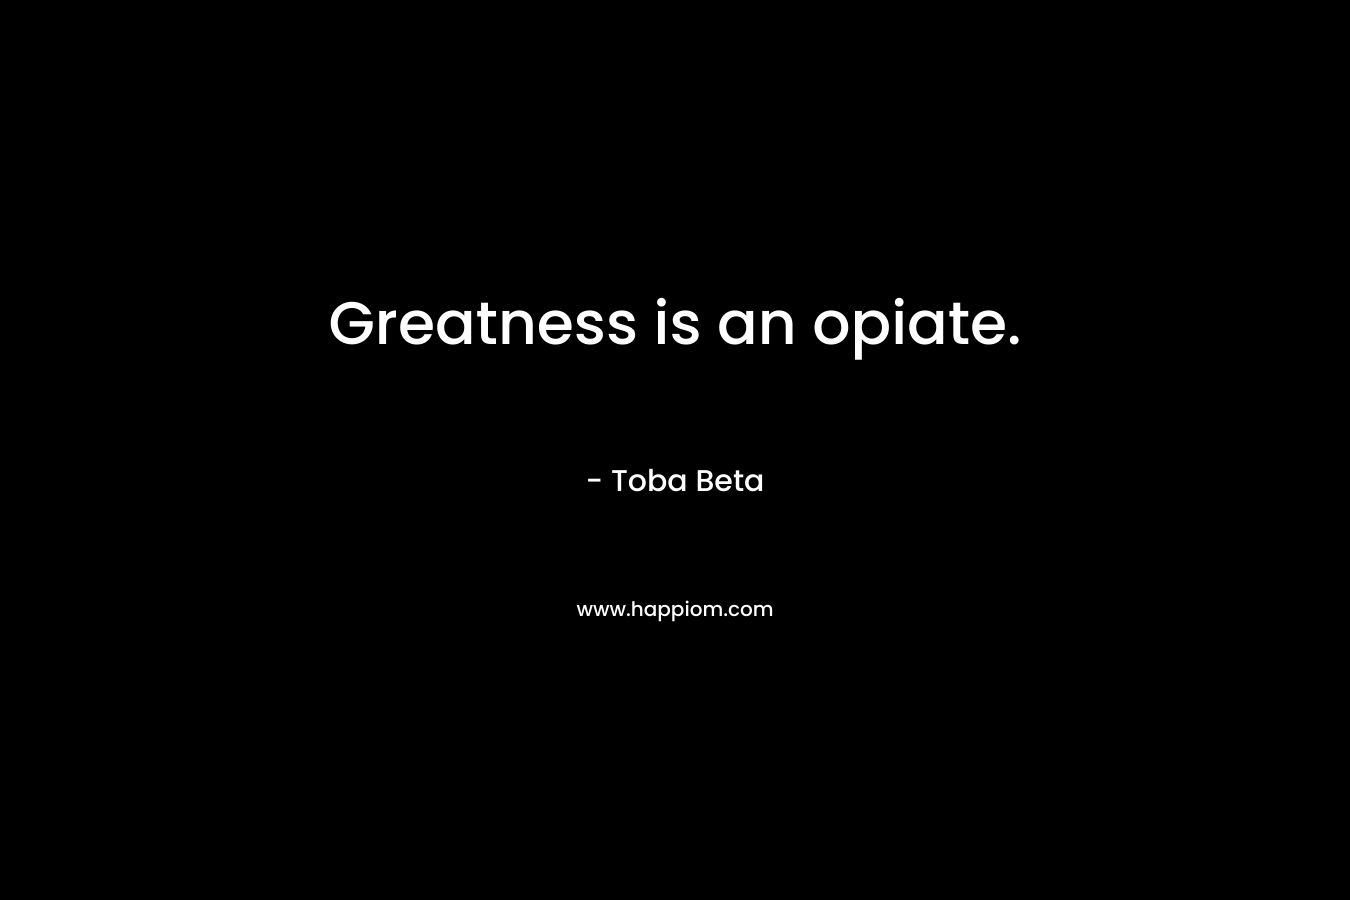 Greatness is an opiate.